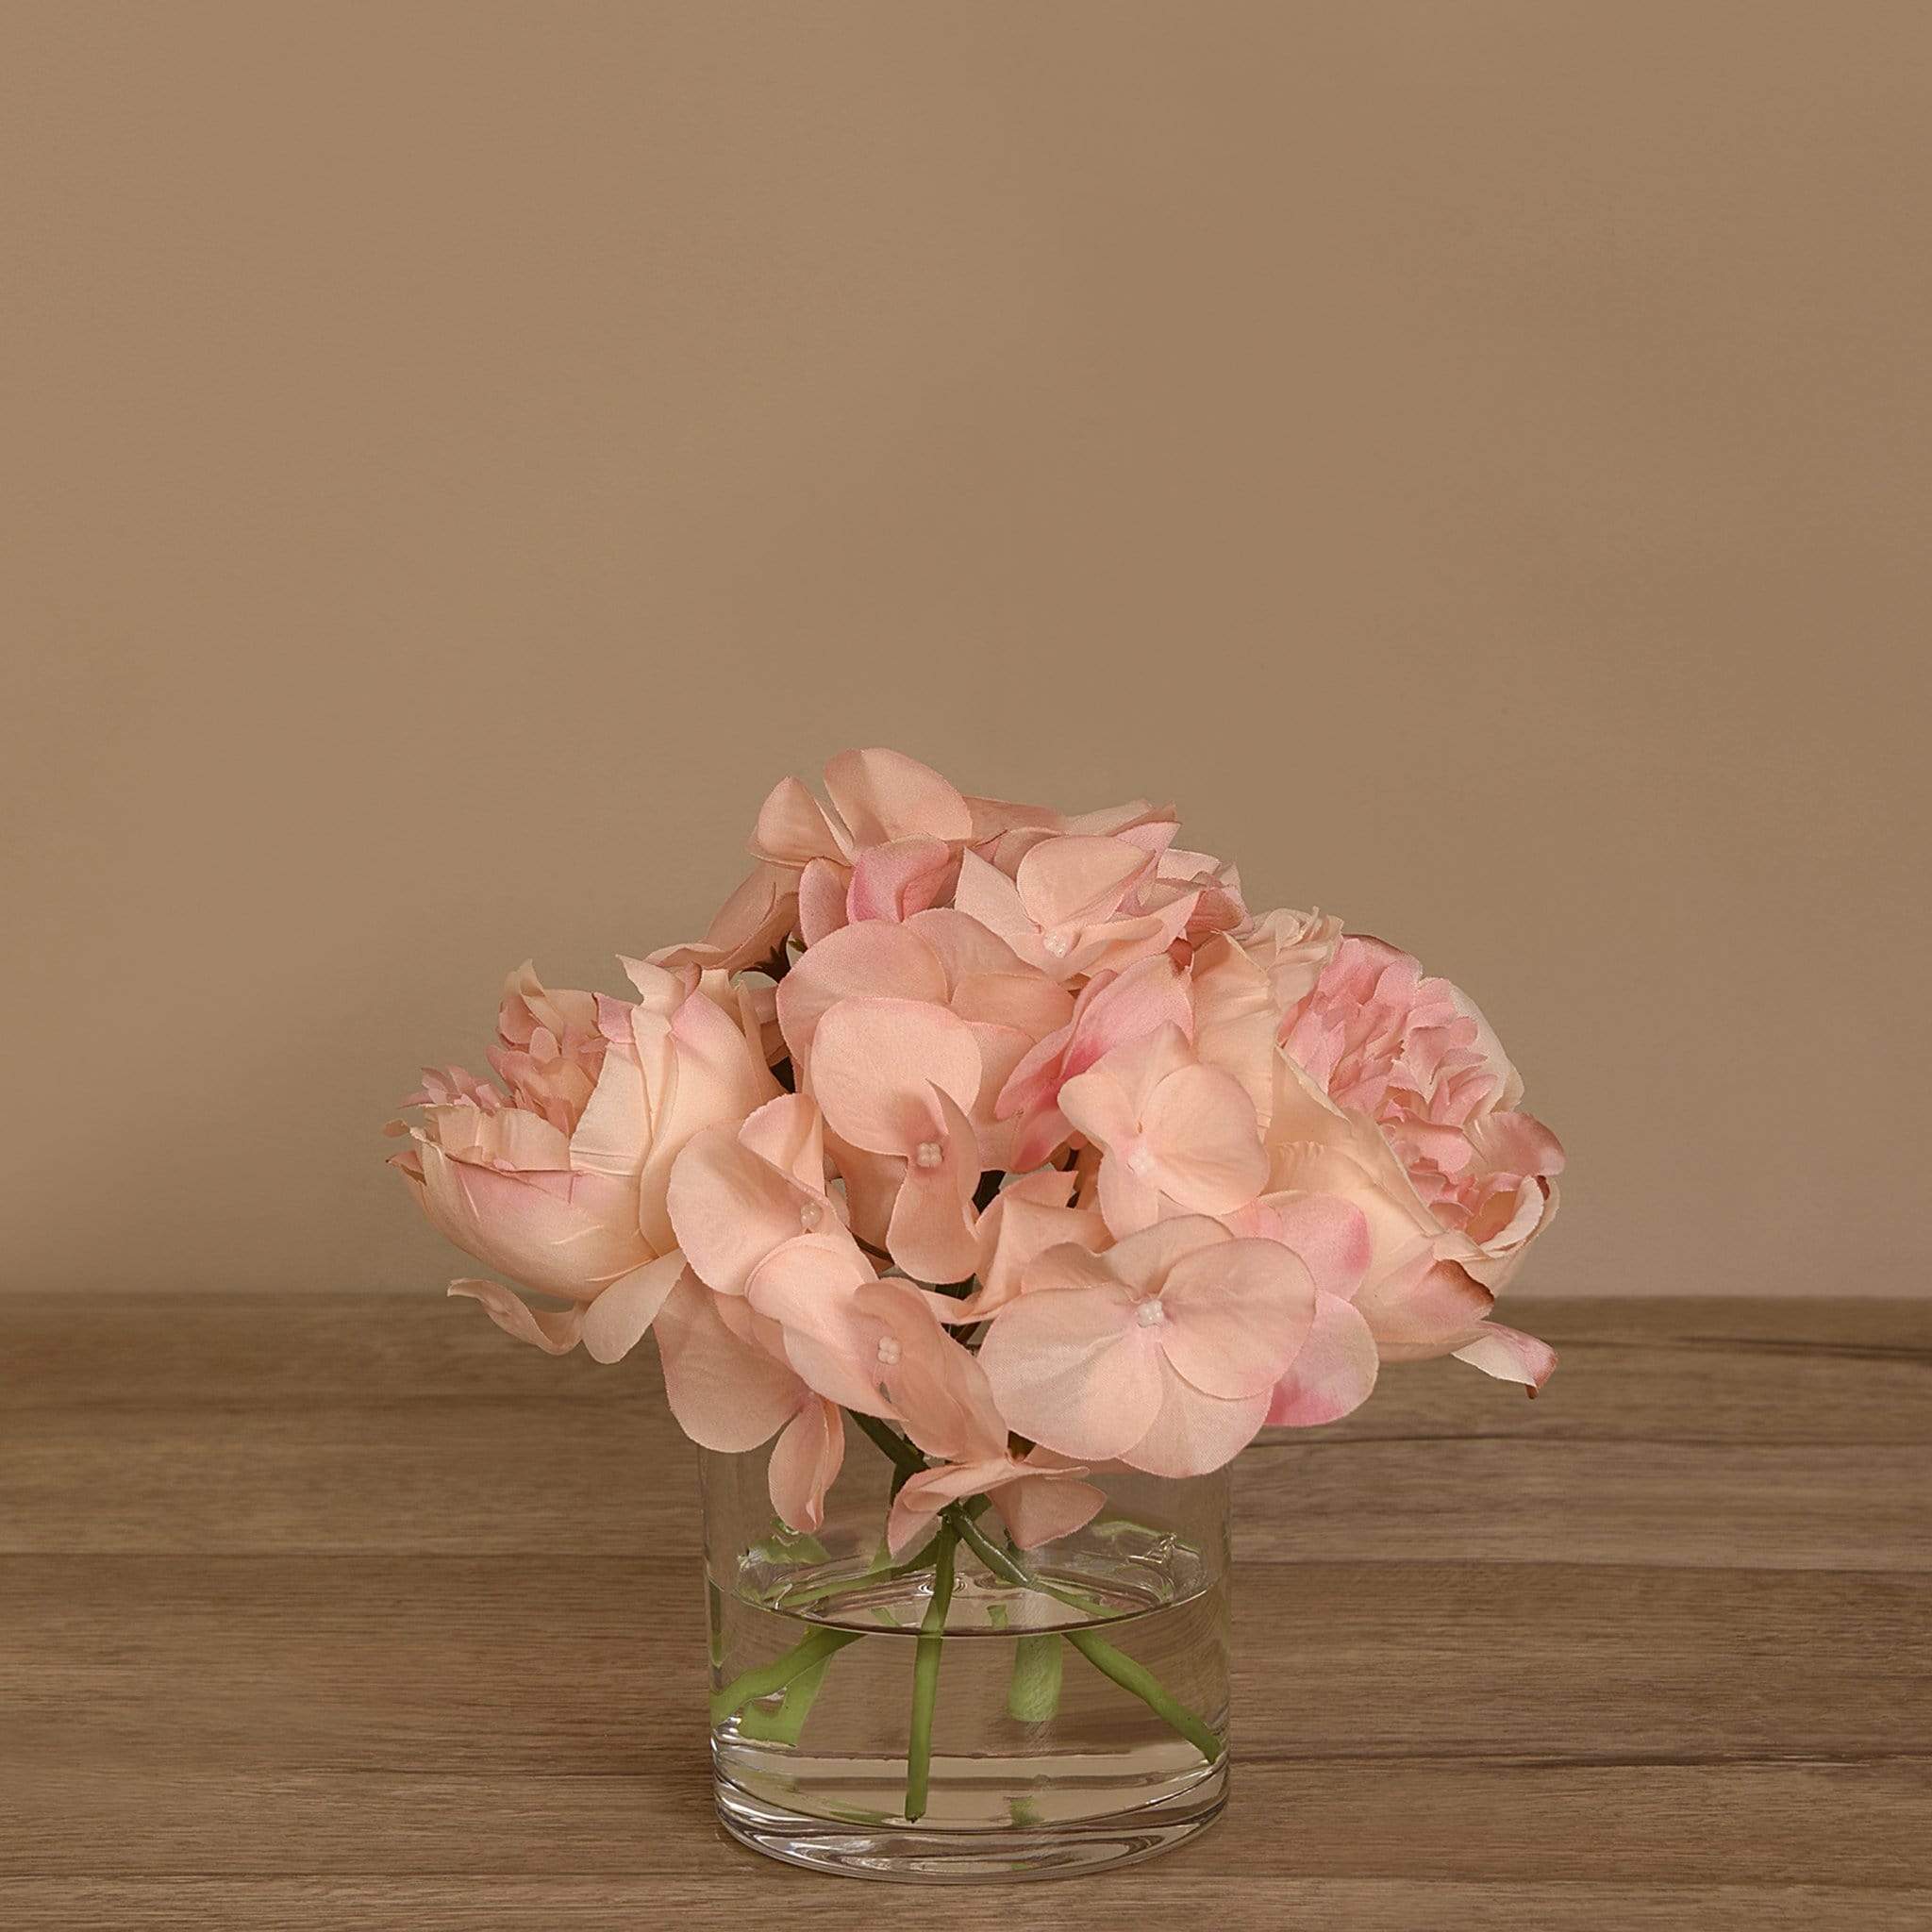 Rose & Hydrangea Arrangement in Glass Vase - Bloomr